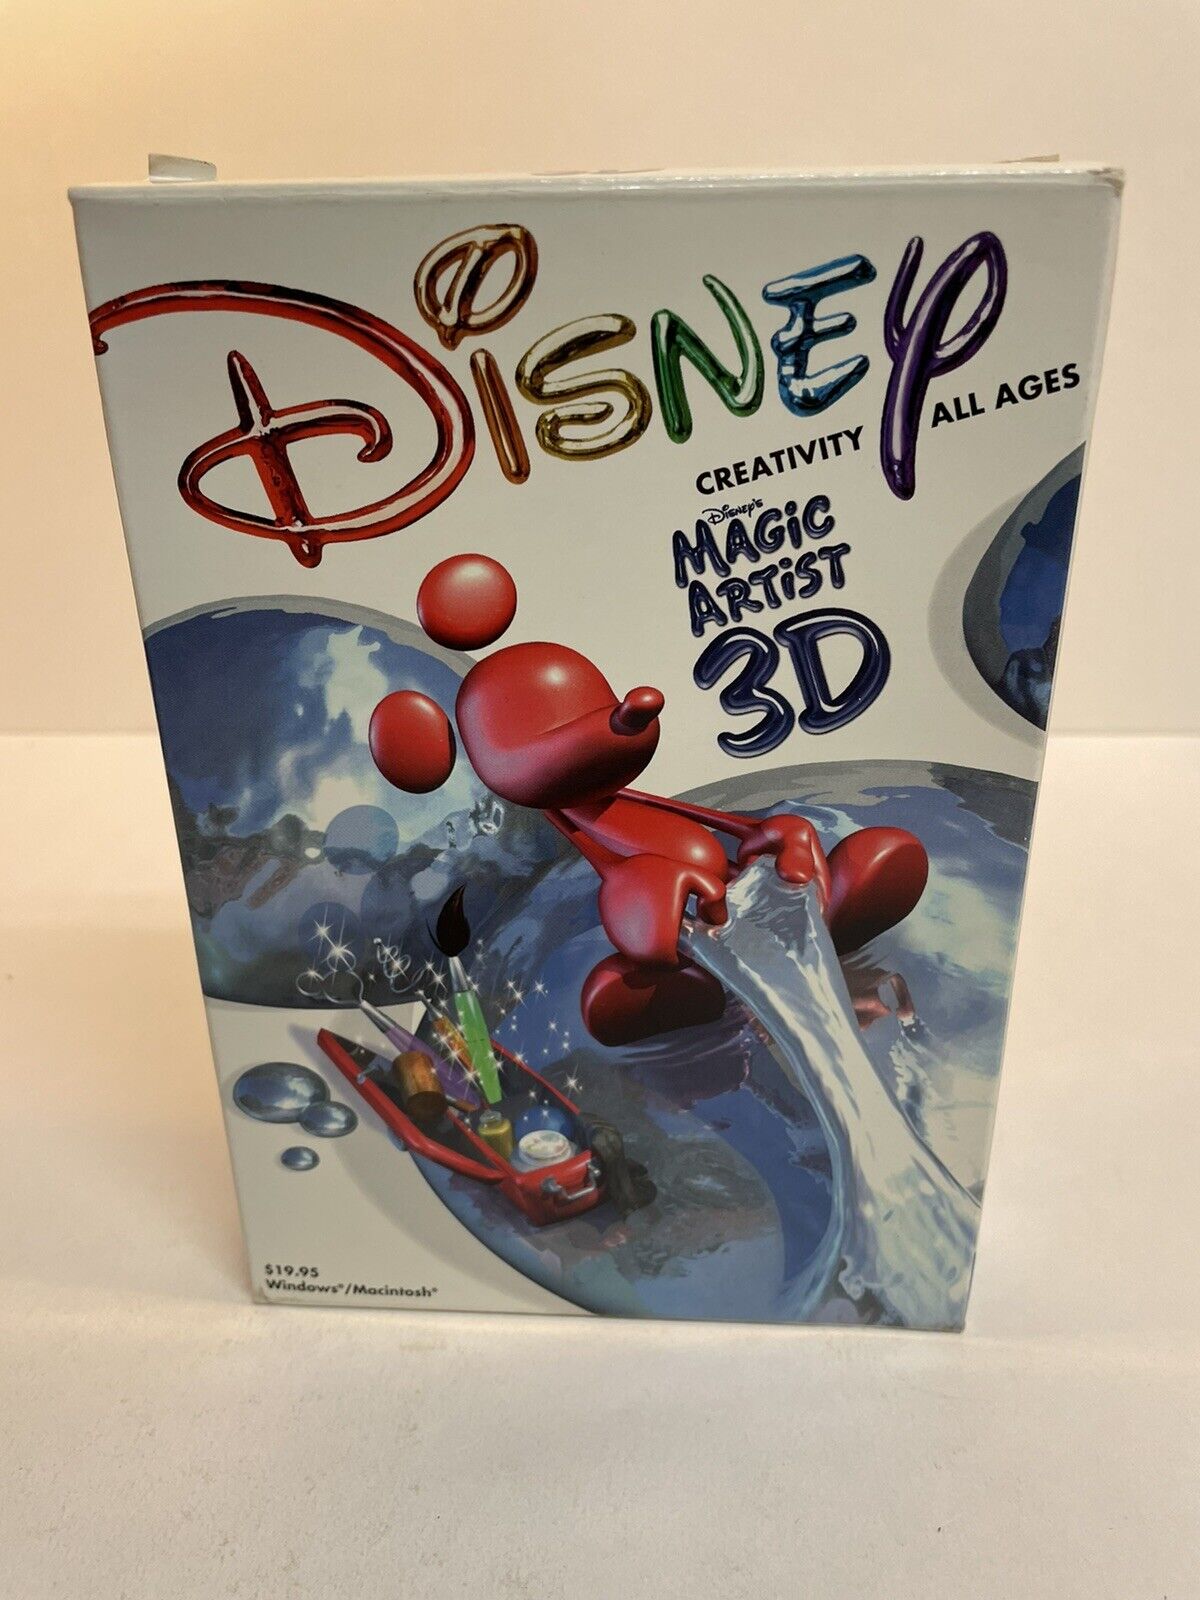 Disney Magic Artist 3D Art PC Game CD-ROM Wiindows 95/98/ME & Macintosh Used